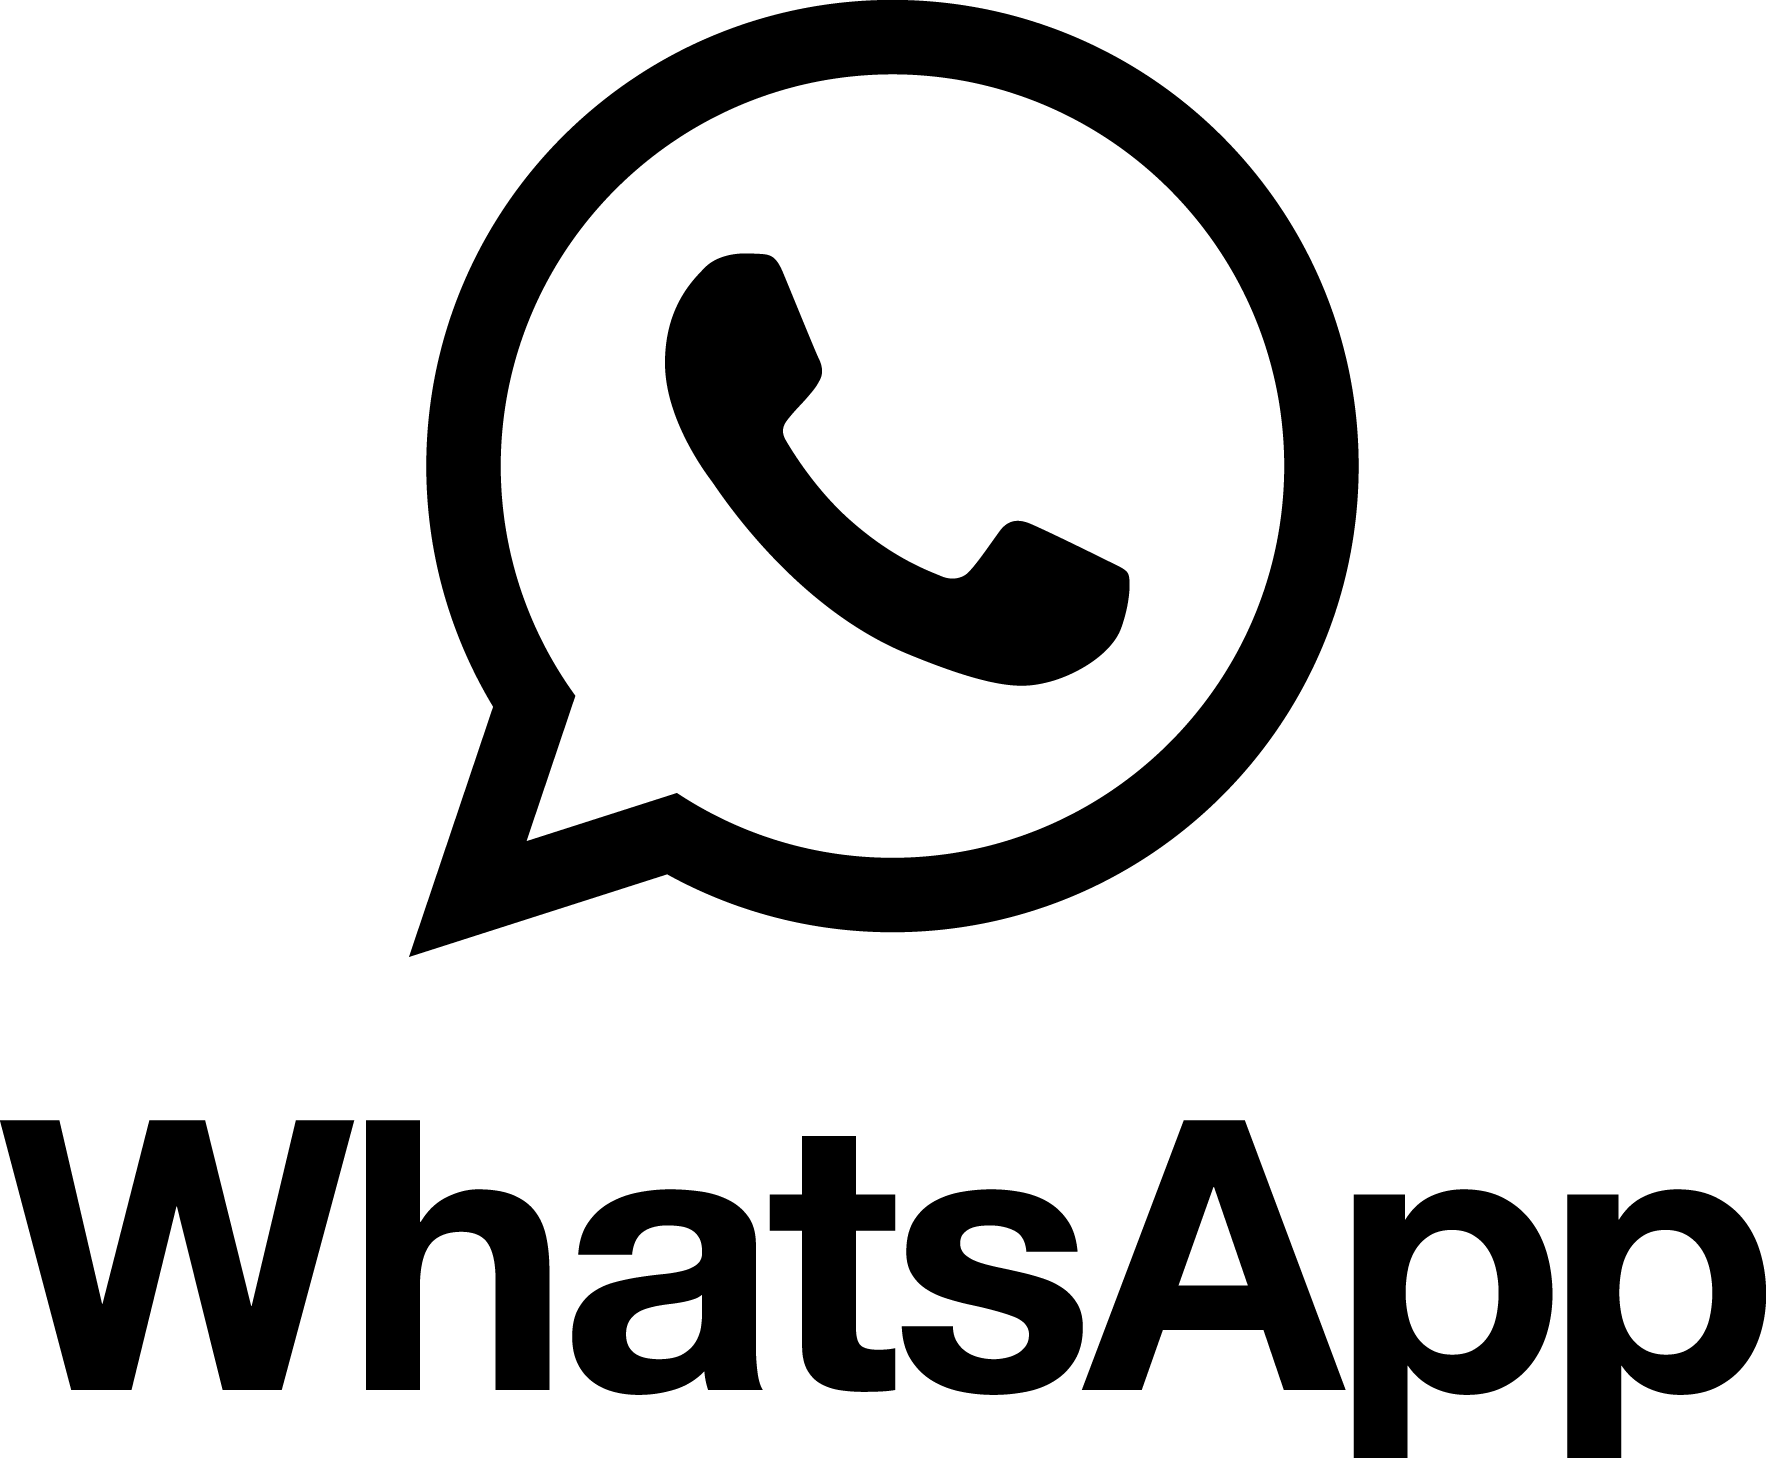 YouTube Black Logo. Format: E